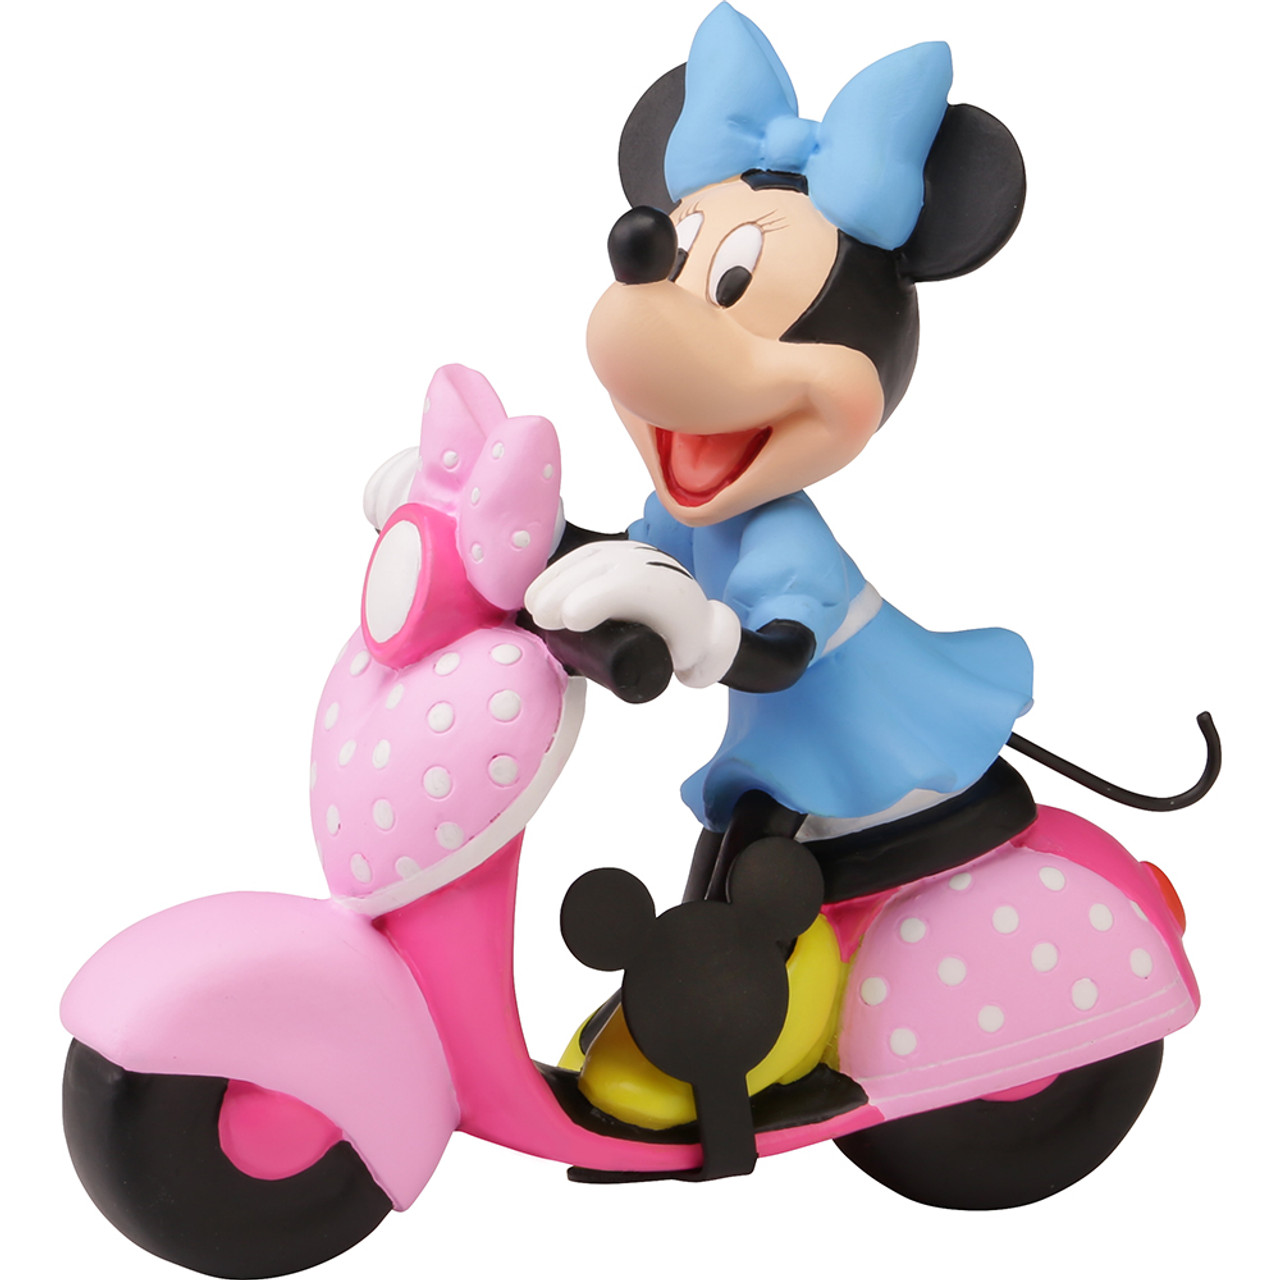 Mouse 201708 Parade Showcase Minnie Disney Figurine Precious Disney Moments Resin/Vinyl Collectible